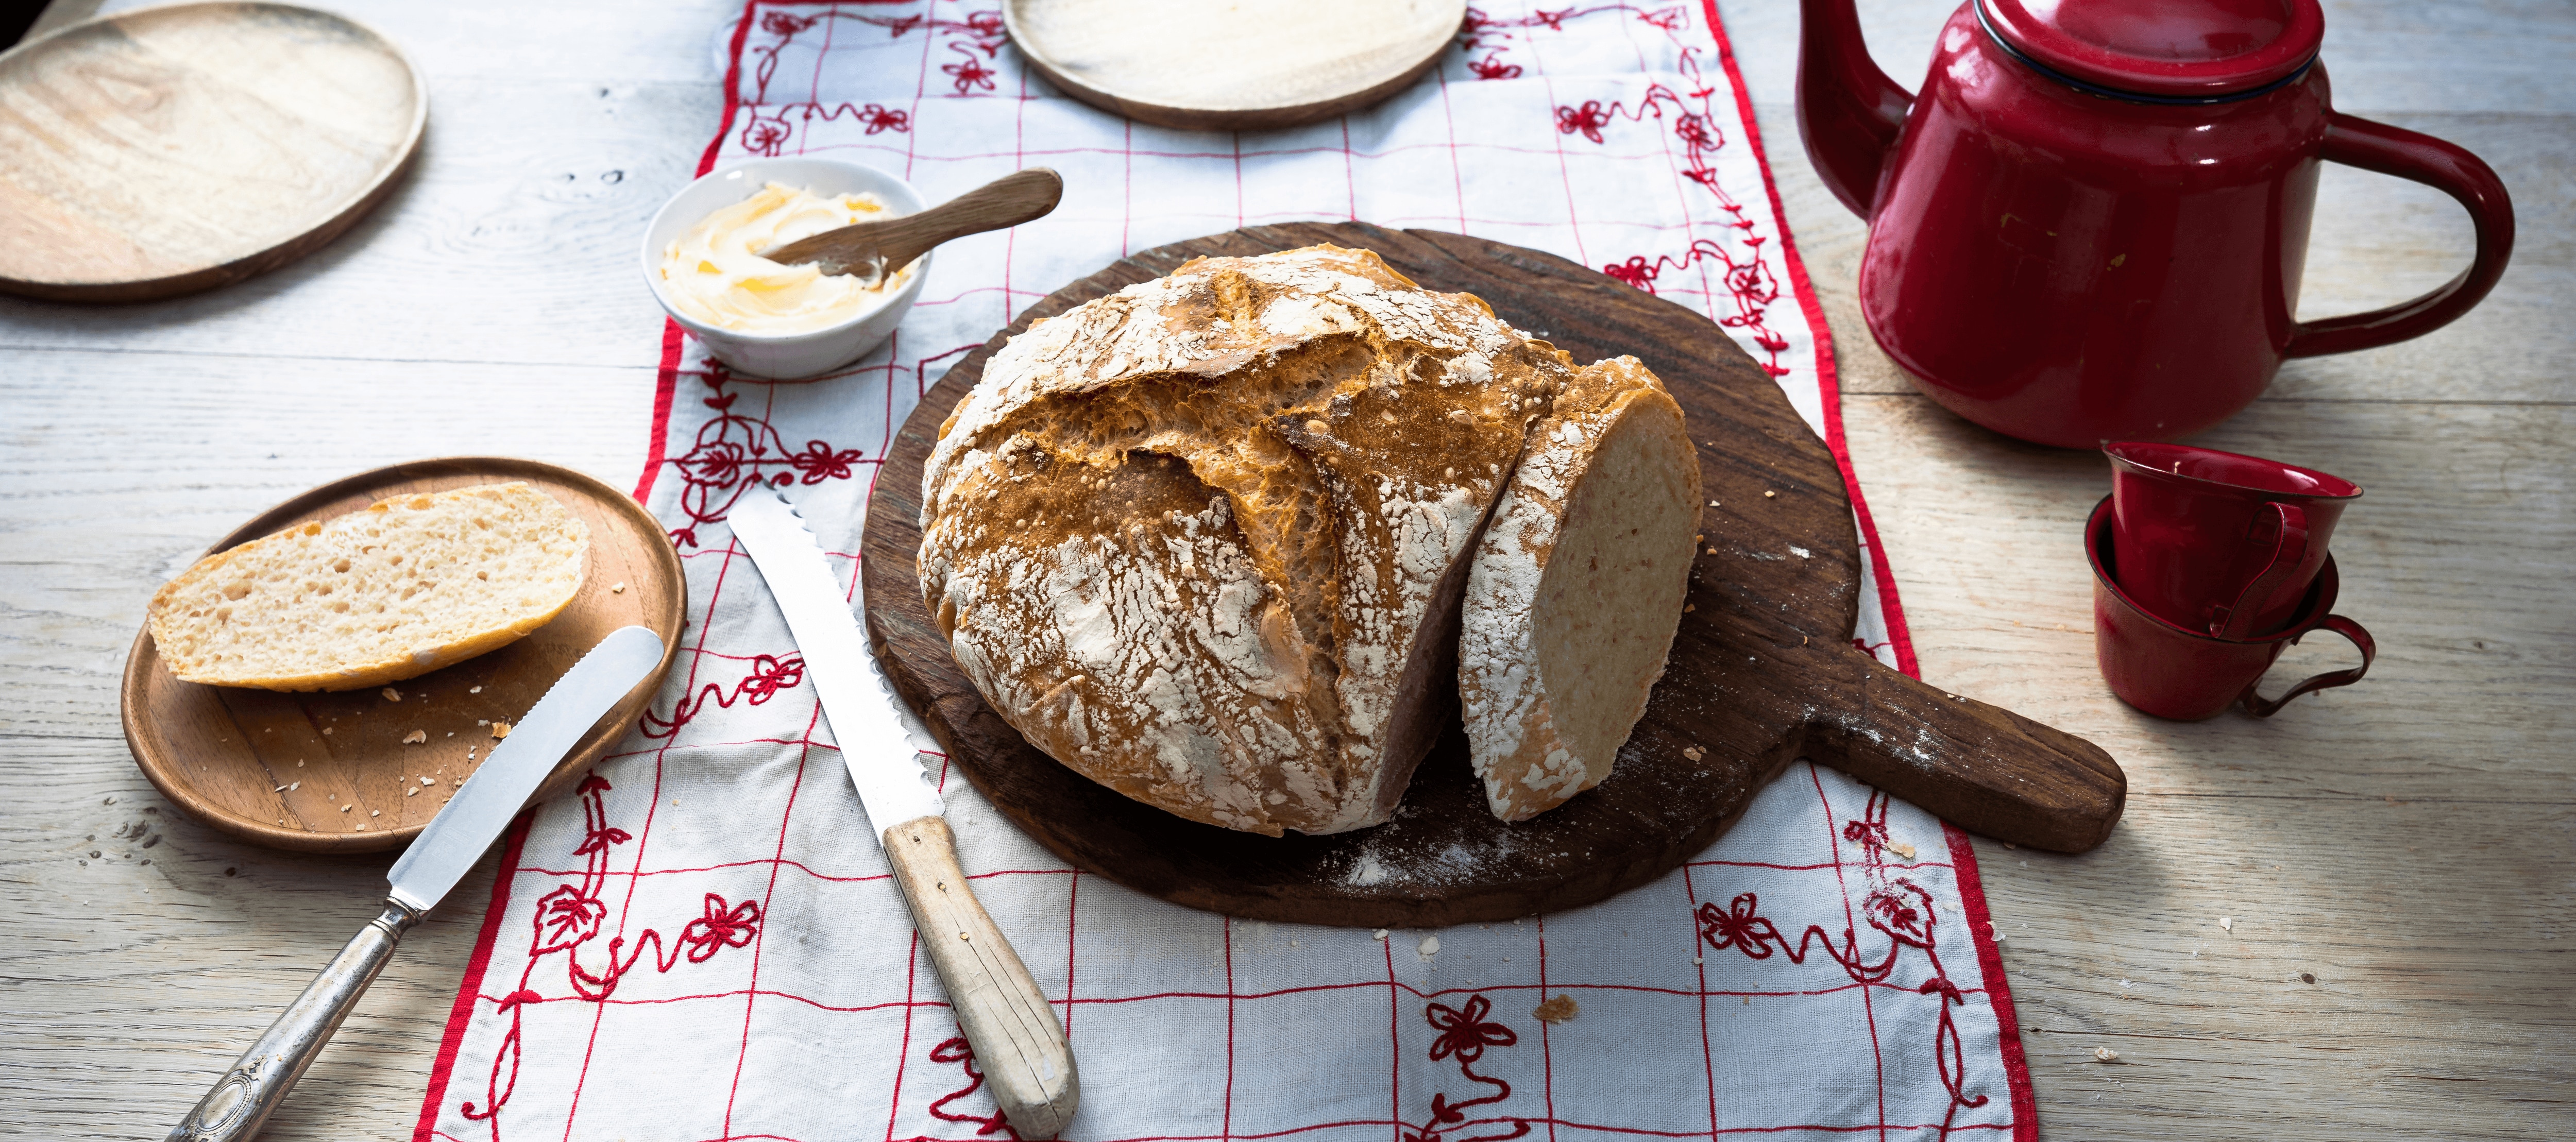 No-knead-bread (Brot ohne kneten)